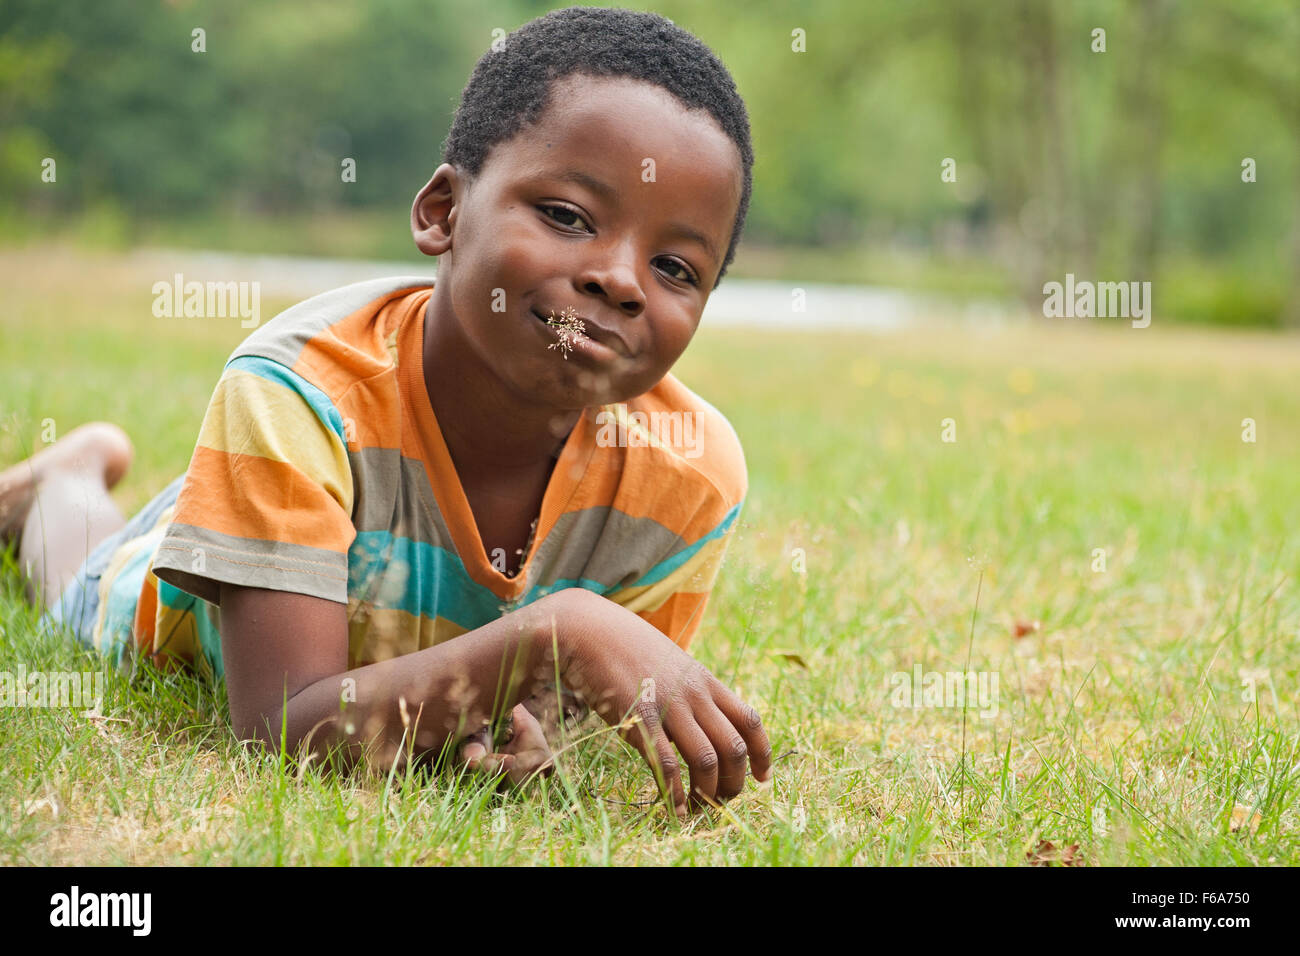 African boy est relacing dans l'herbe Banque D'Images